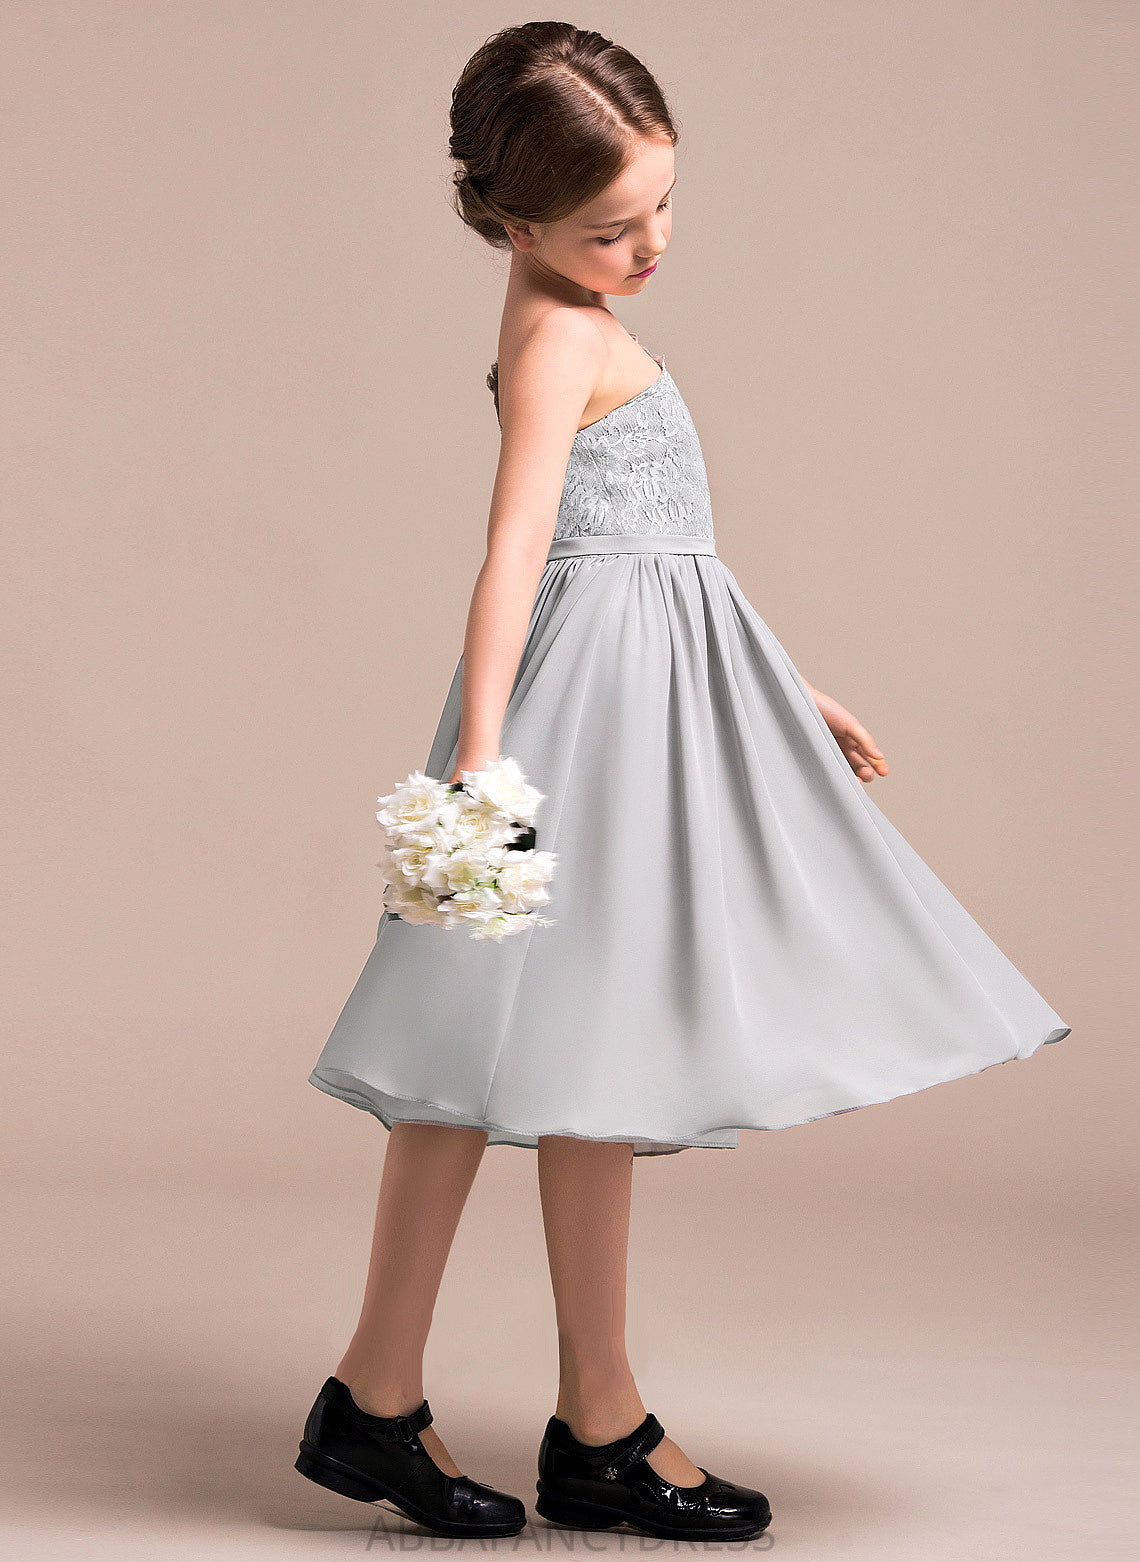 Chiffon A-Line Lace Junior Bridesmaid Dresses One-Shoulder Knee-Length Kathy